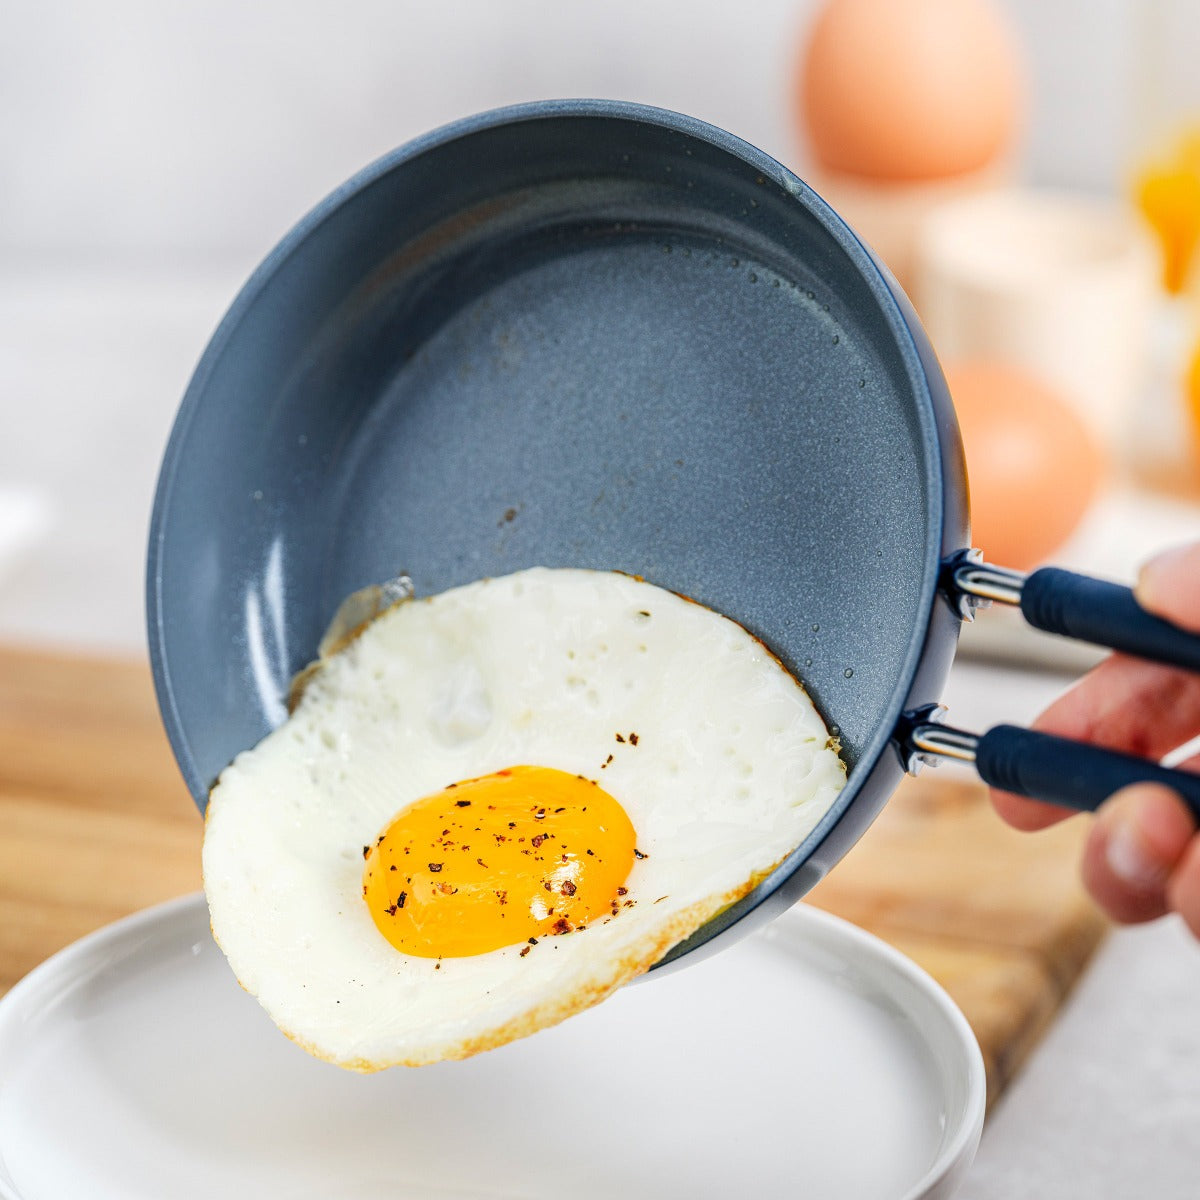 EZ Eggs Mini Non Stick Egg Frying Pan Review 